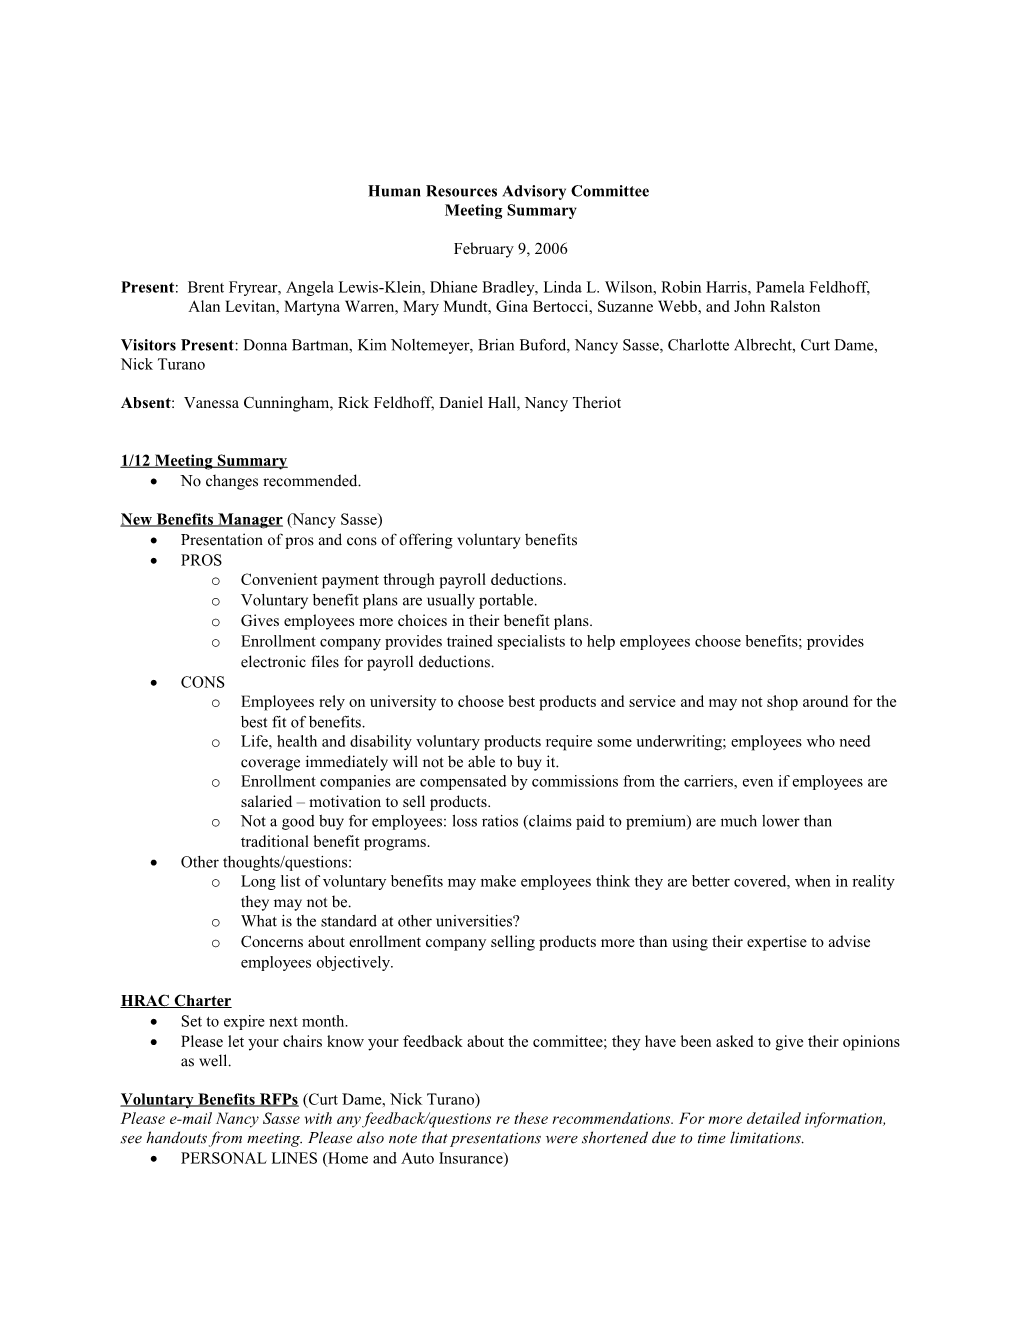 Human Resources Advisory Committee Agenda